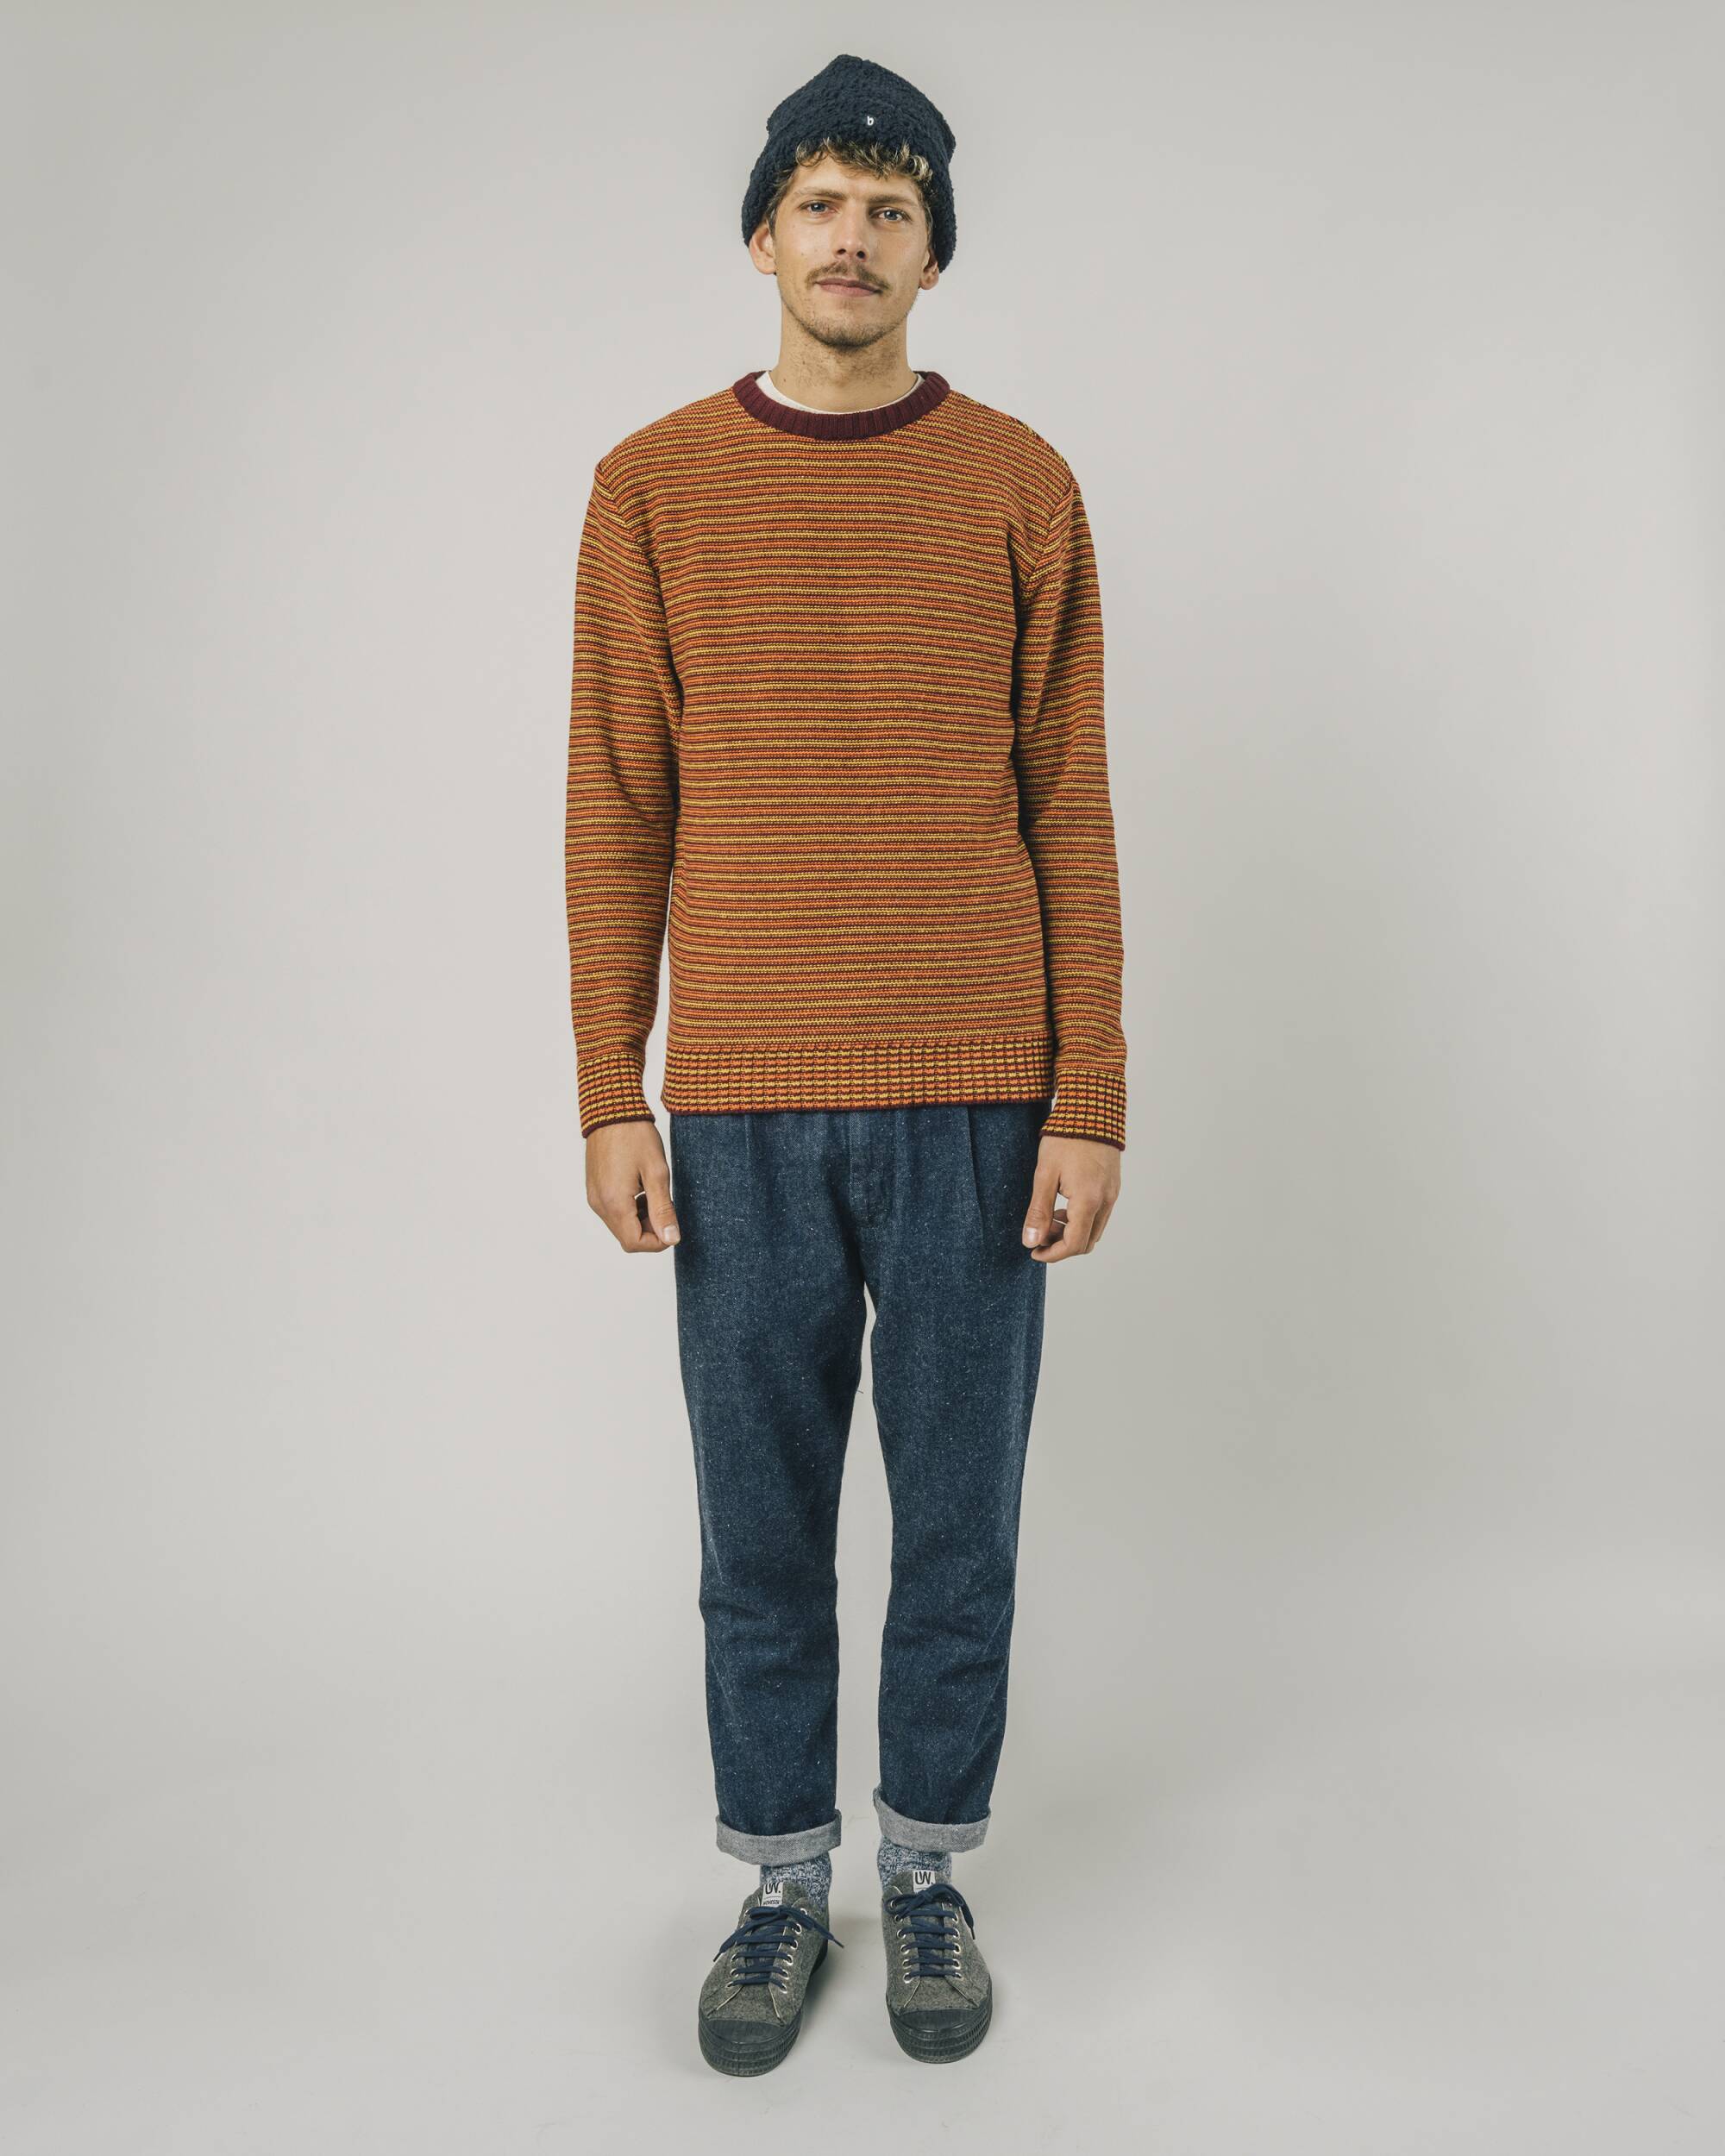 Orange wool and cashmere Stripes sweater from Brava Fabrics